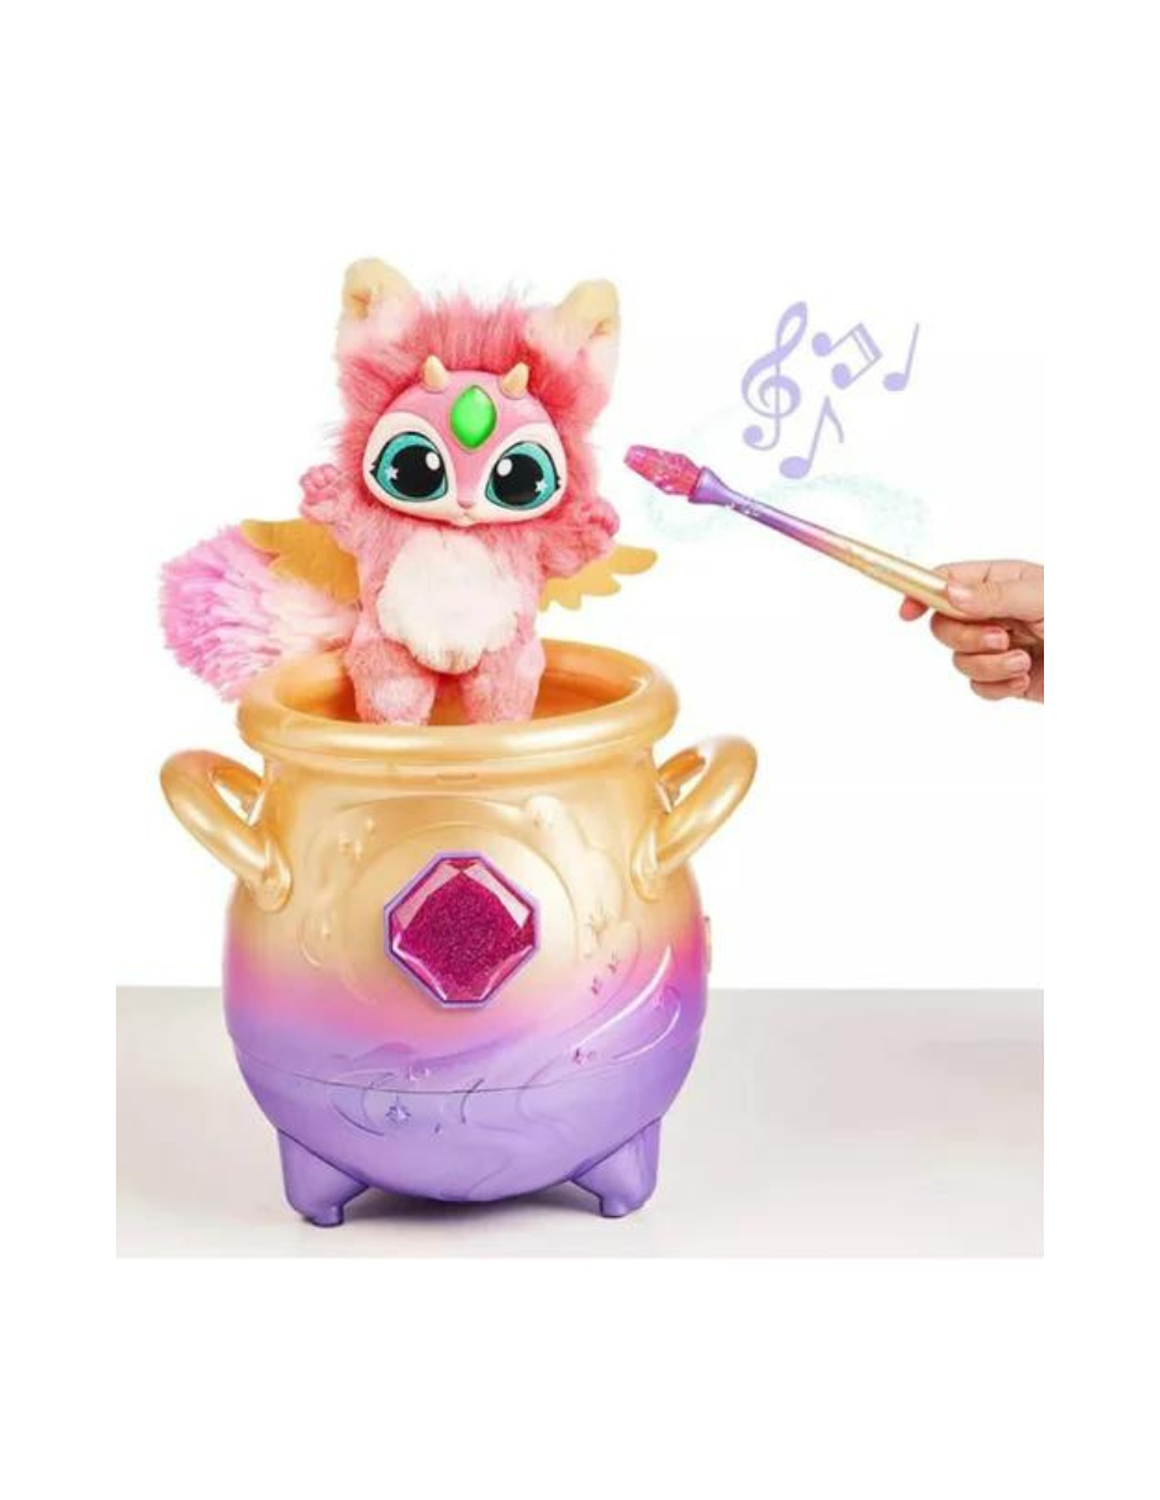 Magic Mixies Magical Misting Cauldron Pink